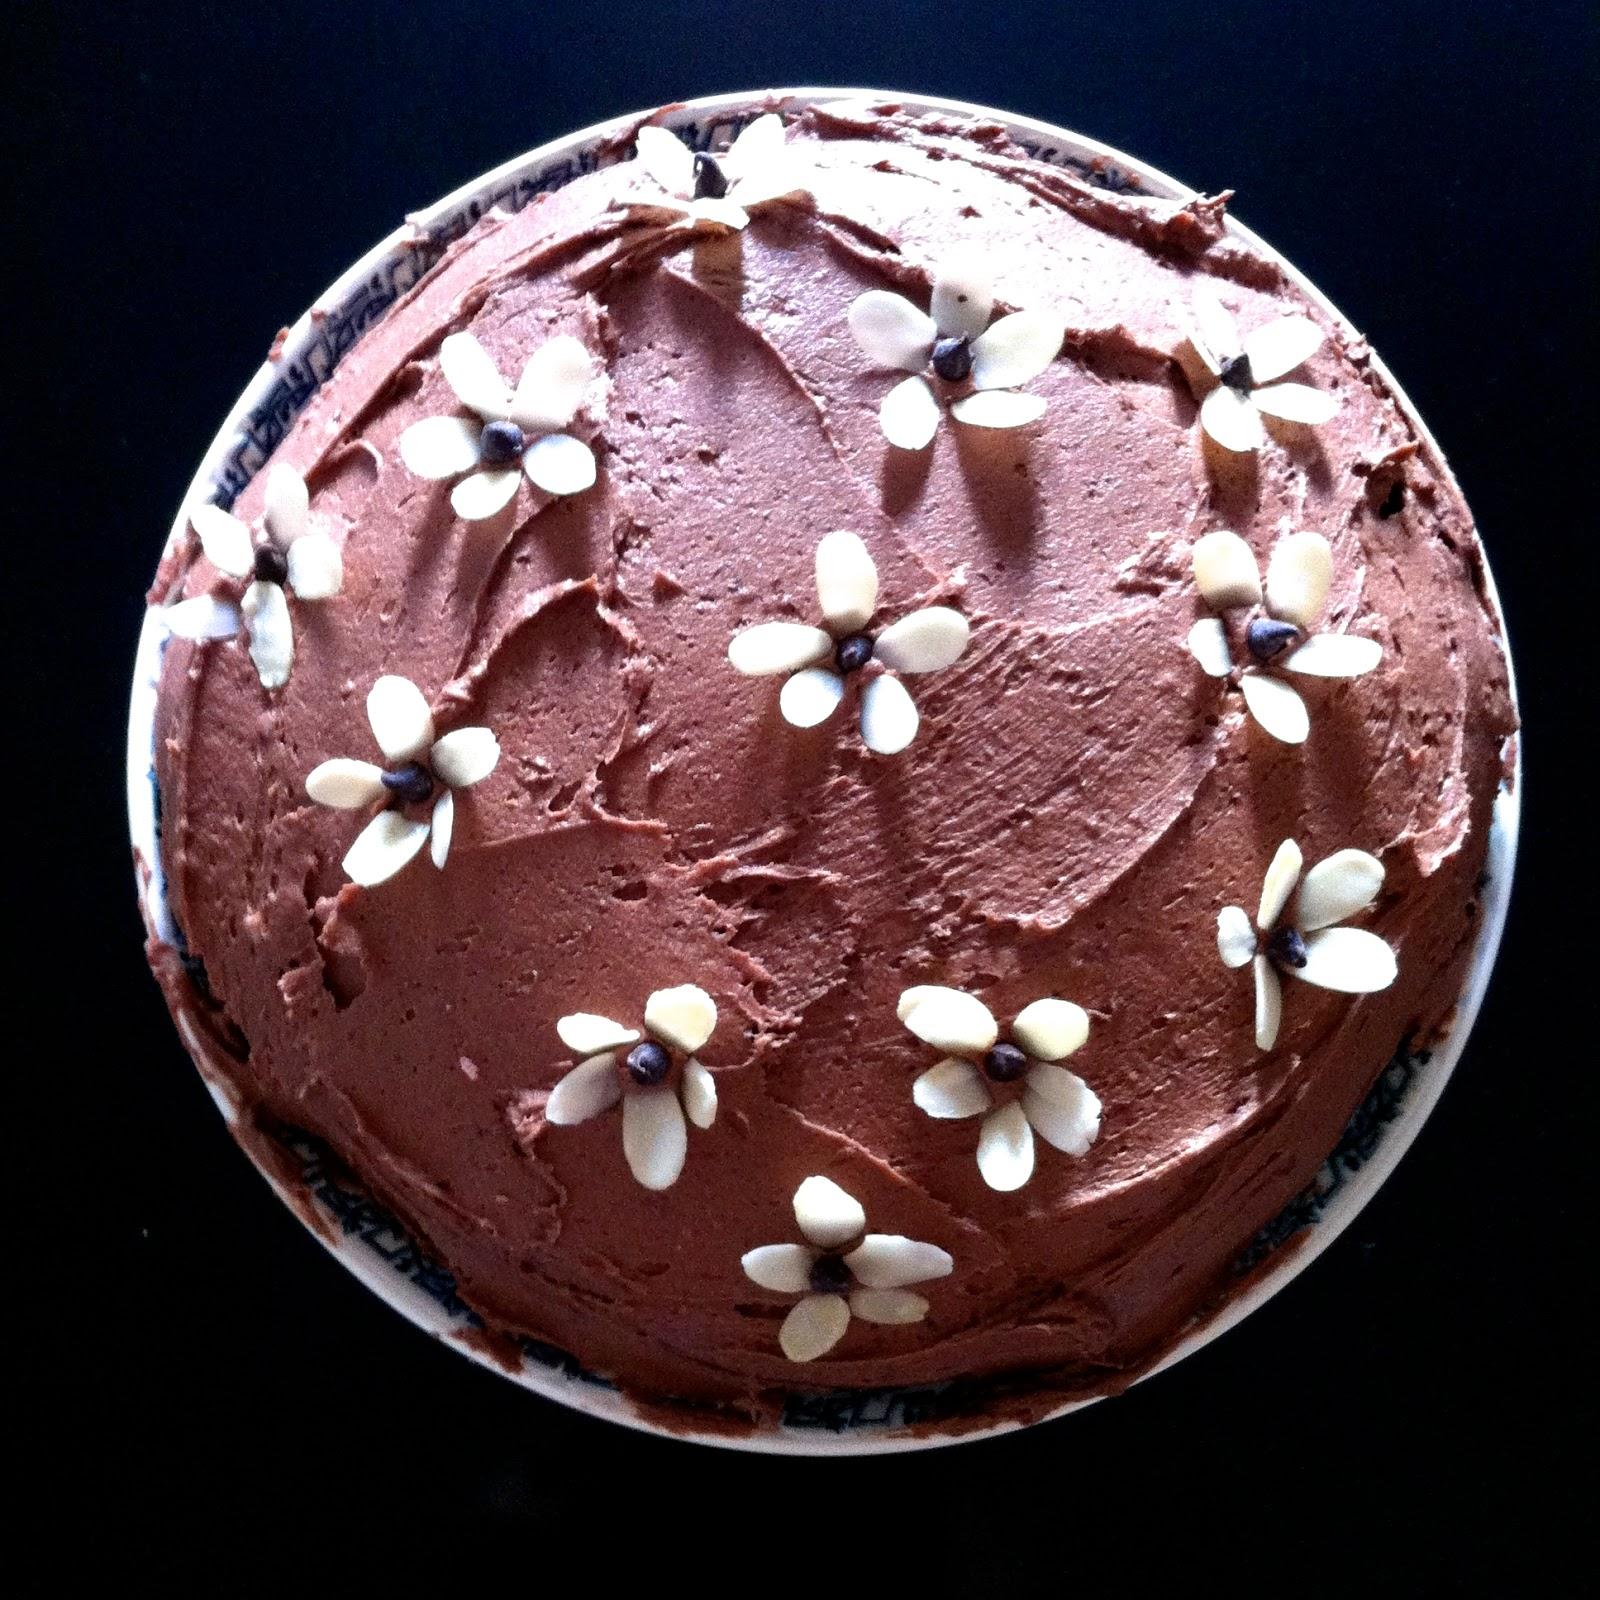 CHOCOLATE FLOWER CAKE...PAR HAYLEY